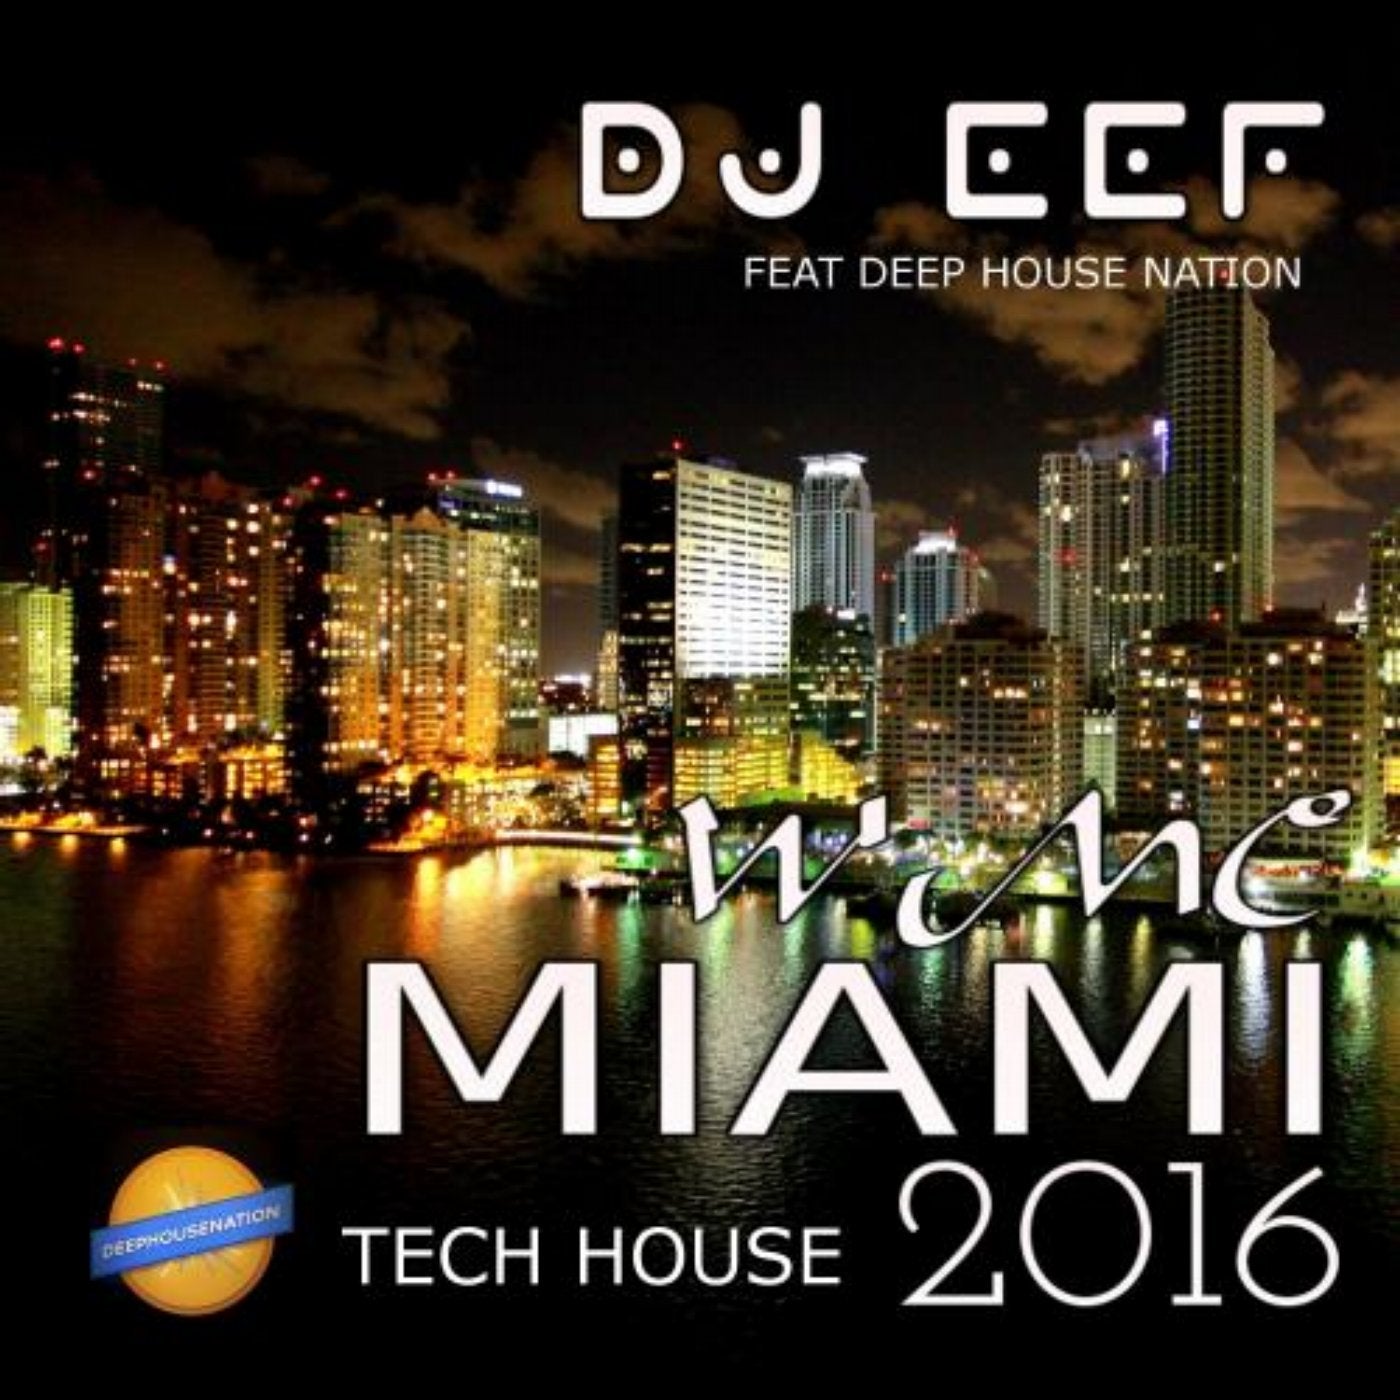 WMC Miami Tech House 2016